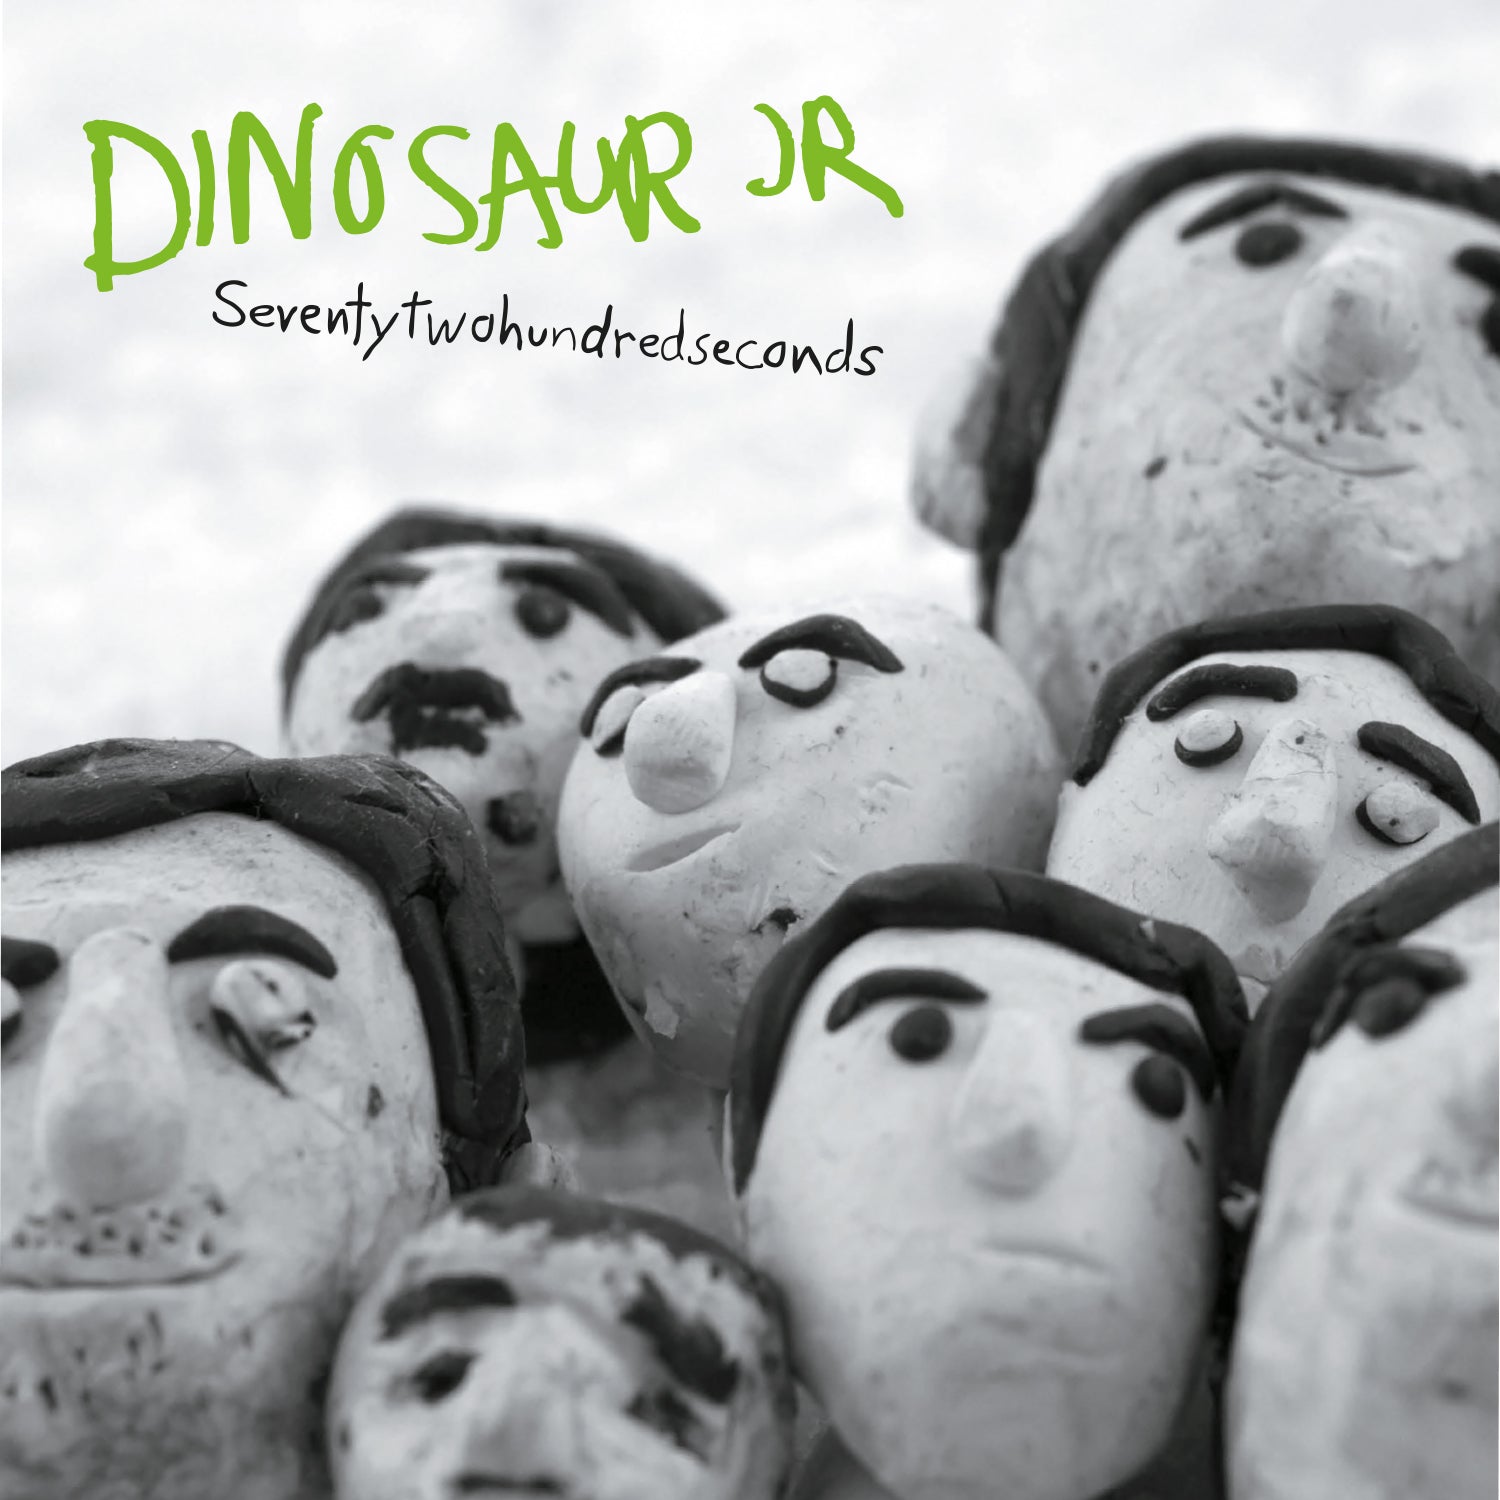 Dinosaur Jr. - Seventytwohundredseconds (Vinyl LP)